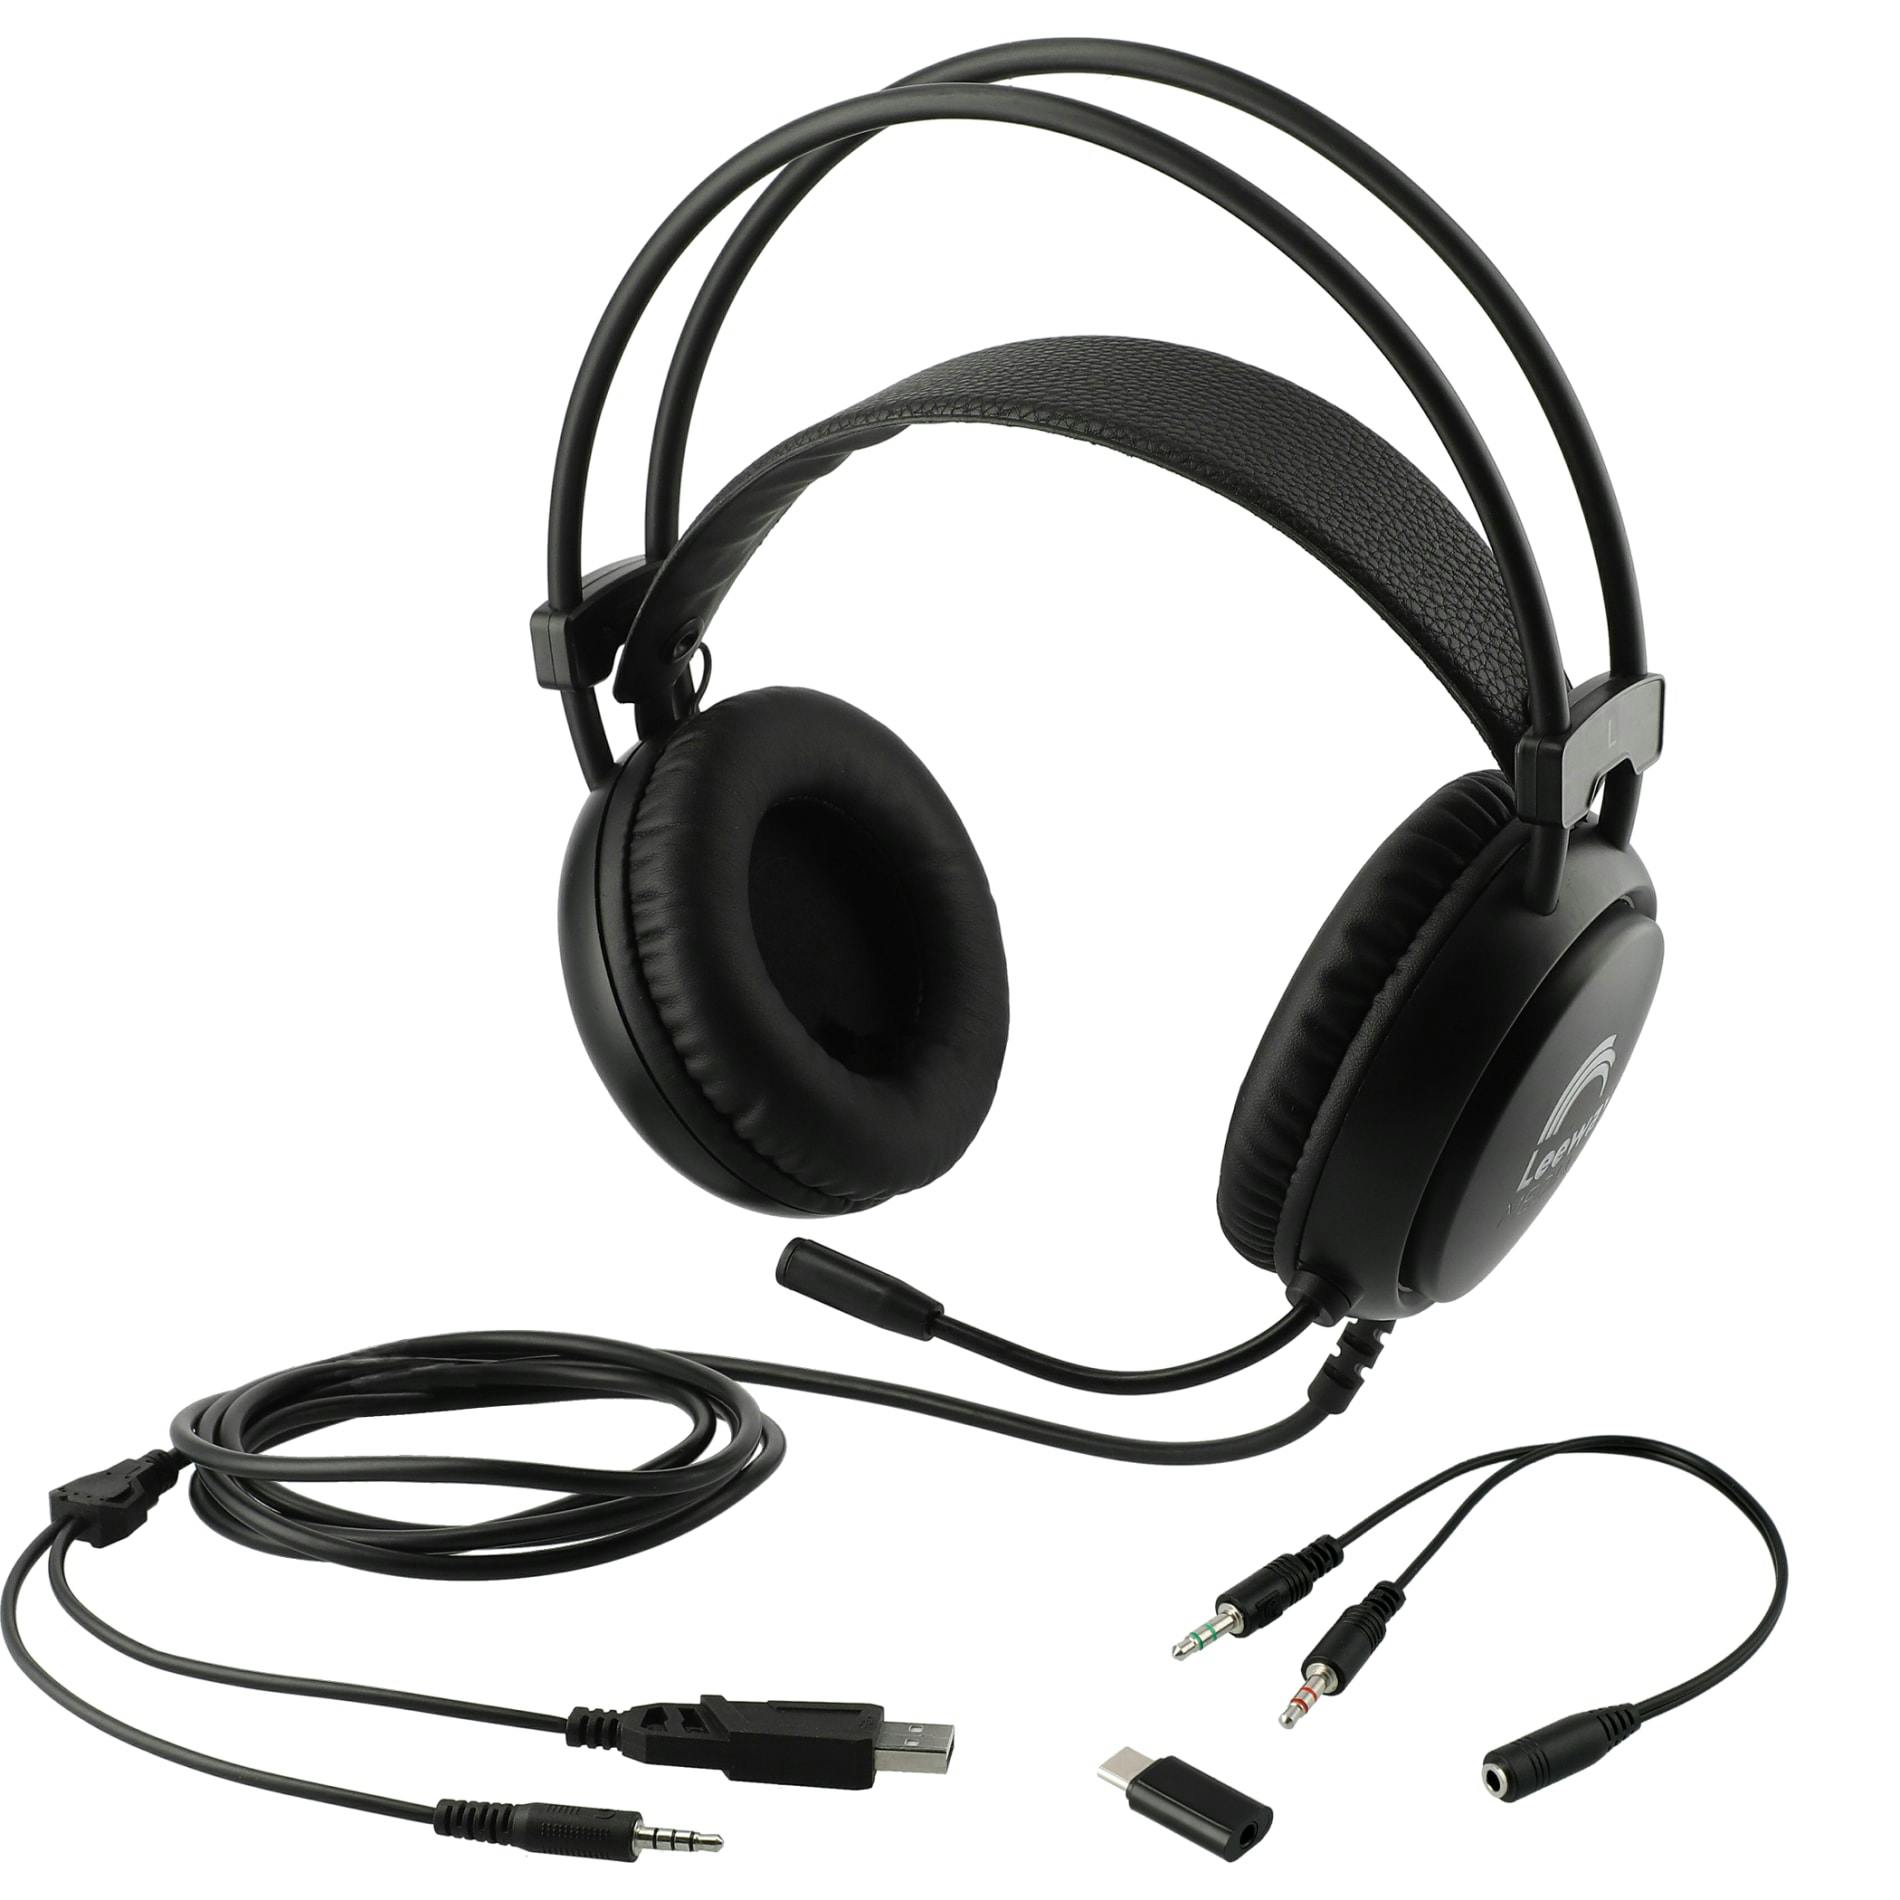 Ignite Gaming Headphones - additional Image 6